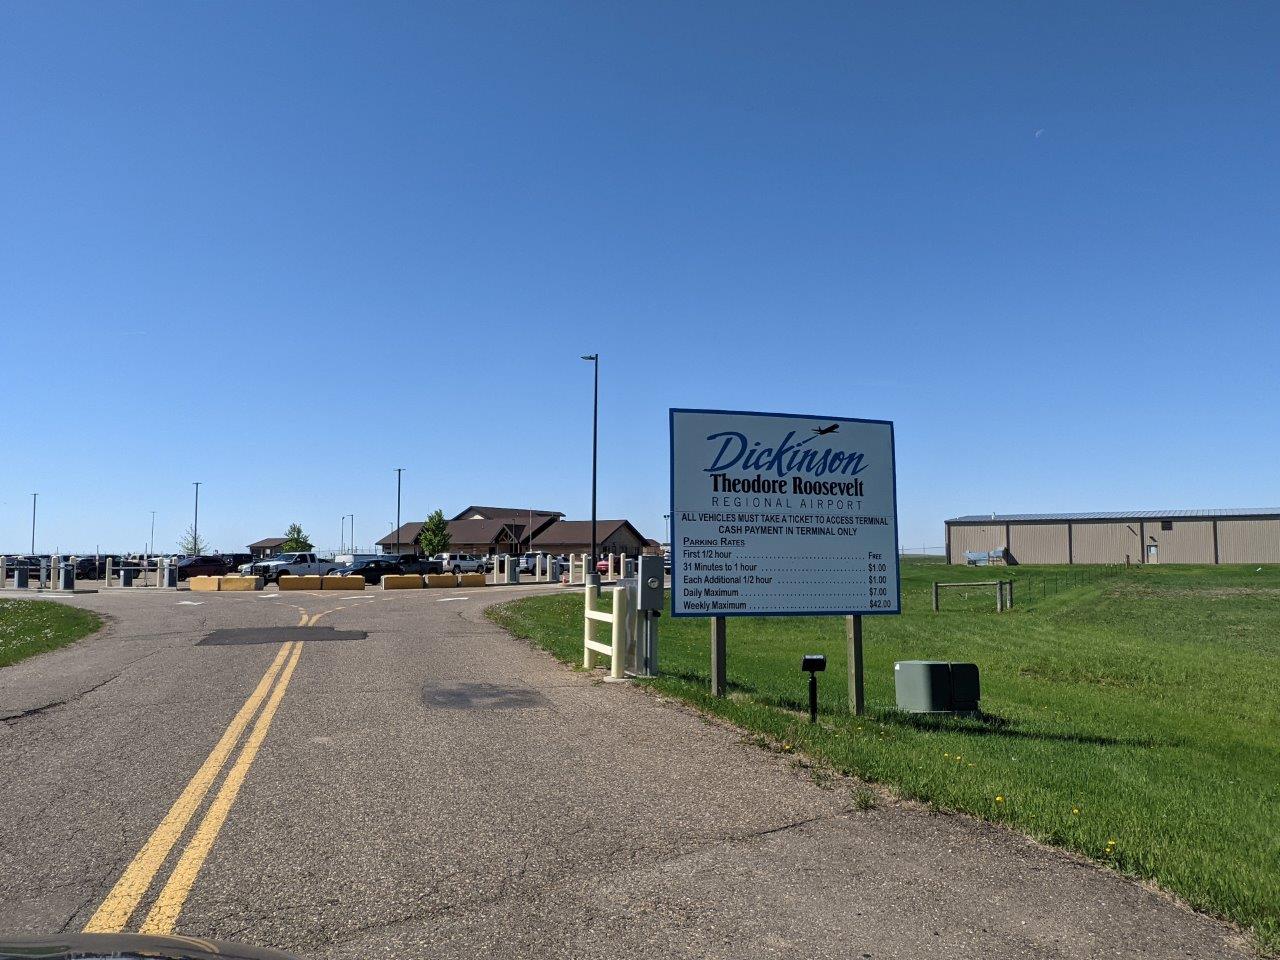 Dickinson Theodore Roosevelt airport in Dickinson, North Dakota